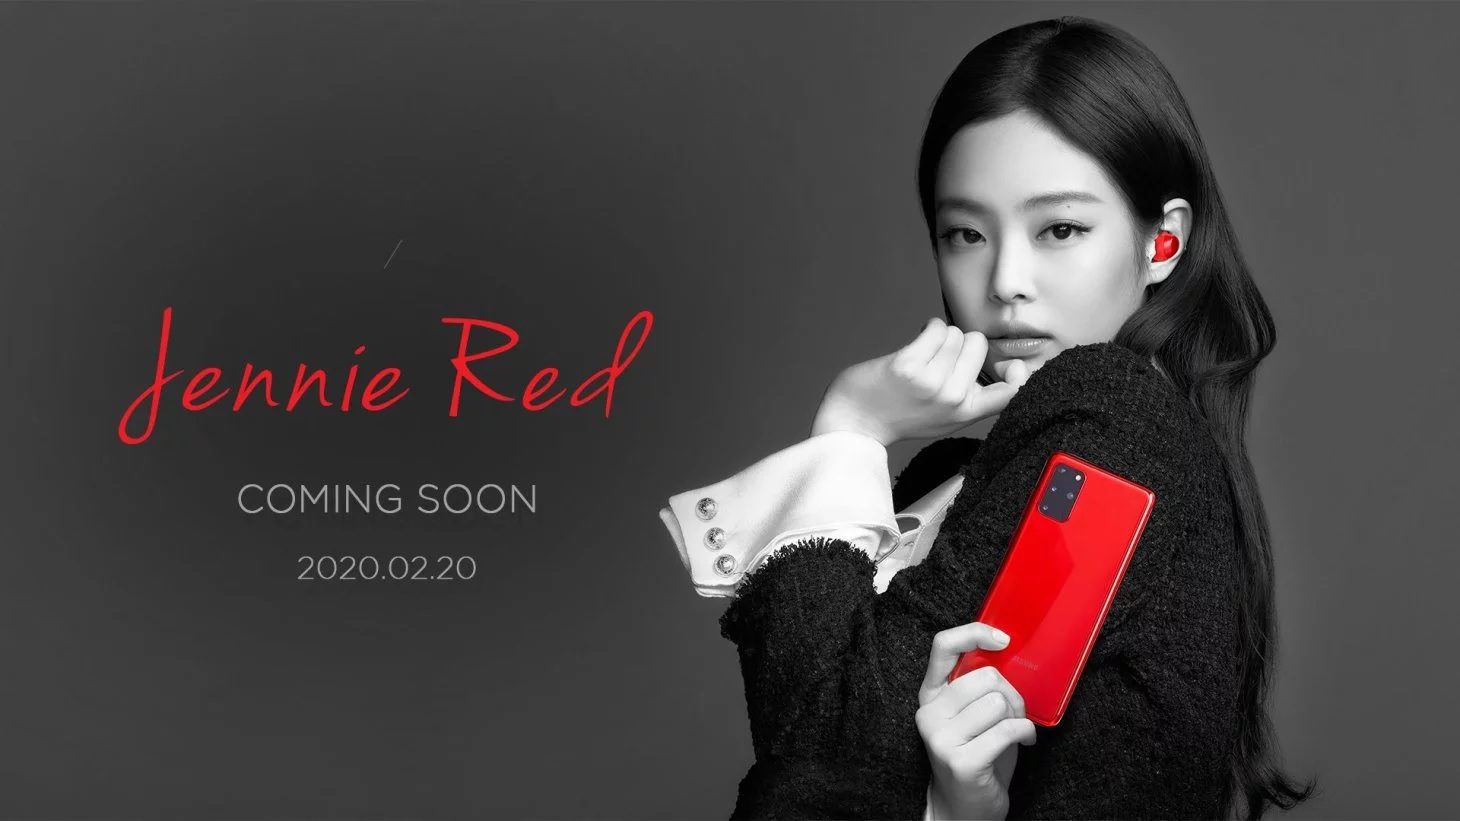 Samsung vend un téléphone Samsung Galaxy S20 + Jenny Red de marque Blackpink et un pack Galaxy Buds +